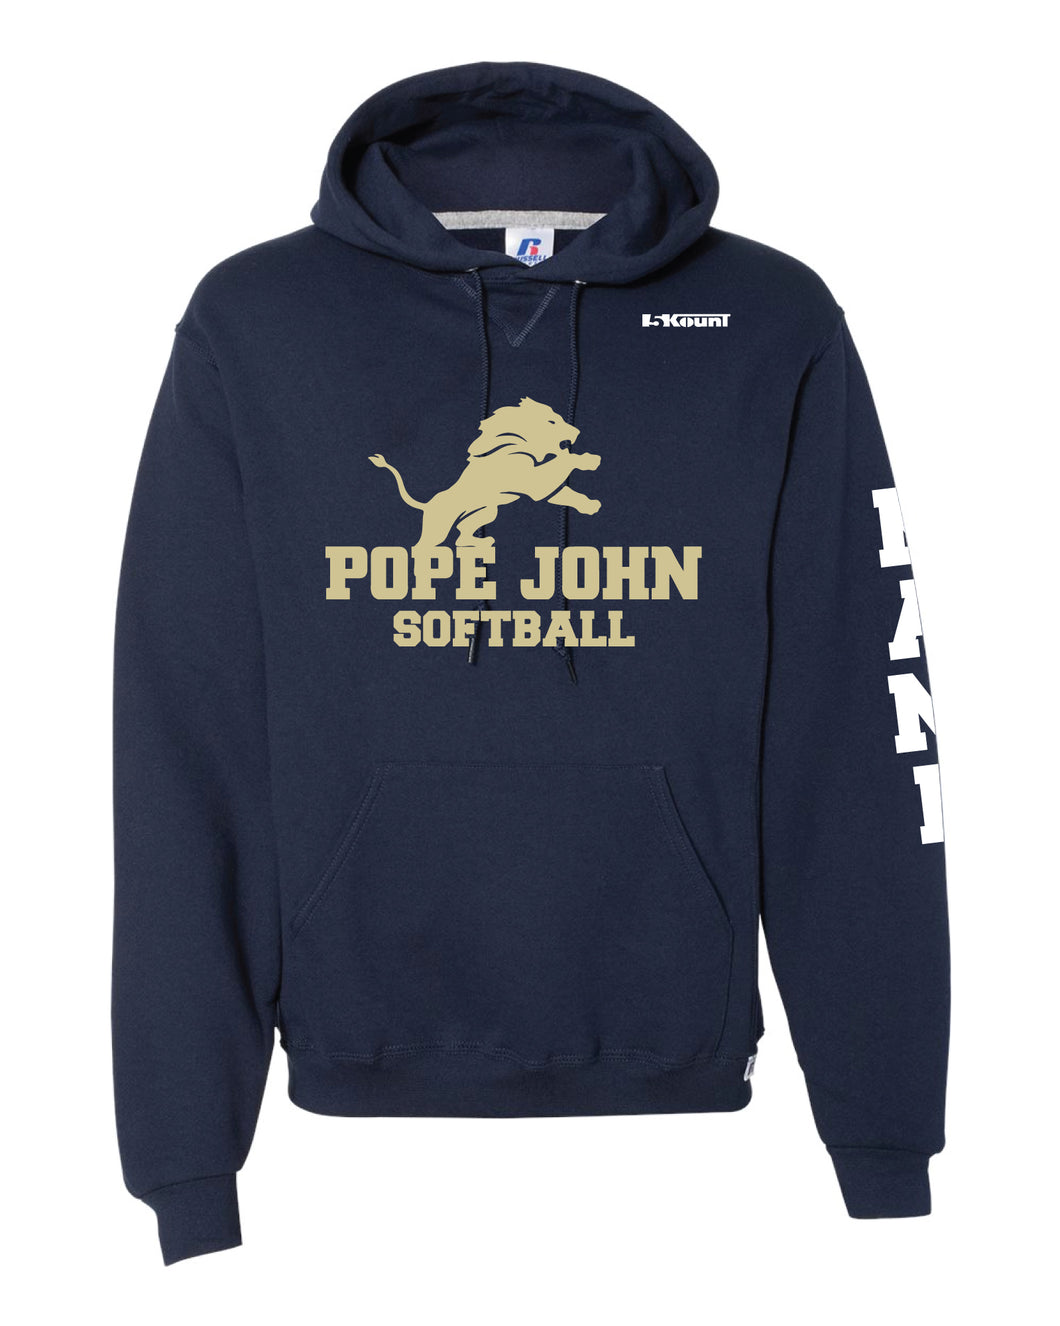 Pope John Softball Russell Athletic Cotton Hoodie - Navy - 5KounT2018